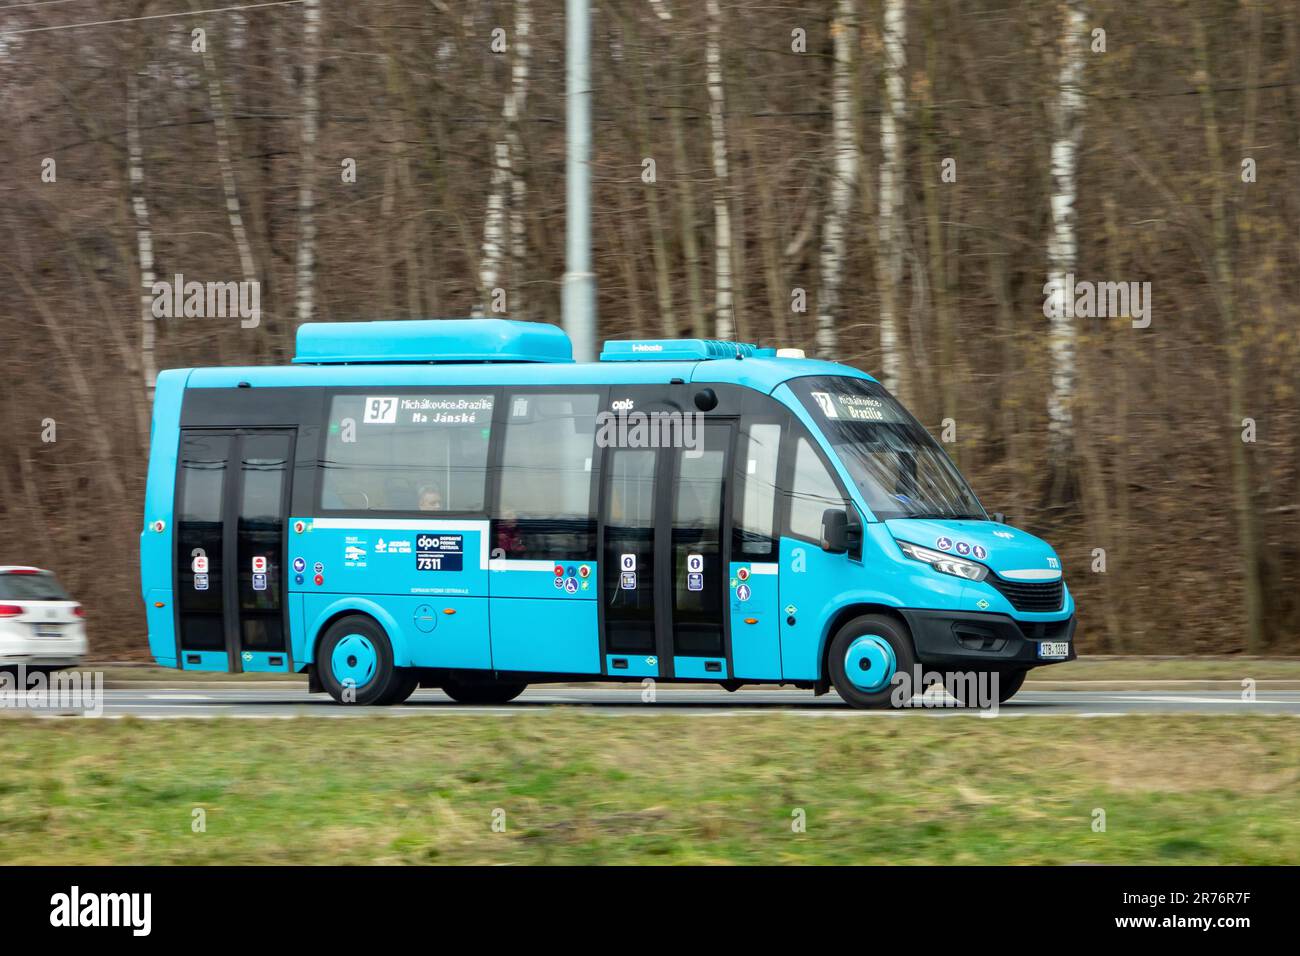 IVECO BUS - New Daily Minibus 